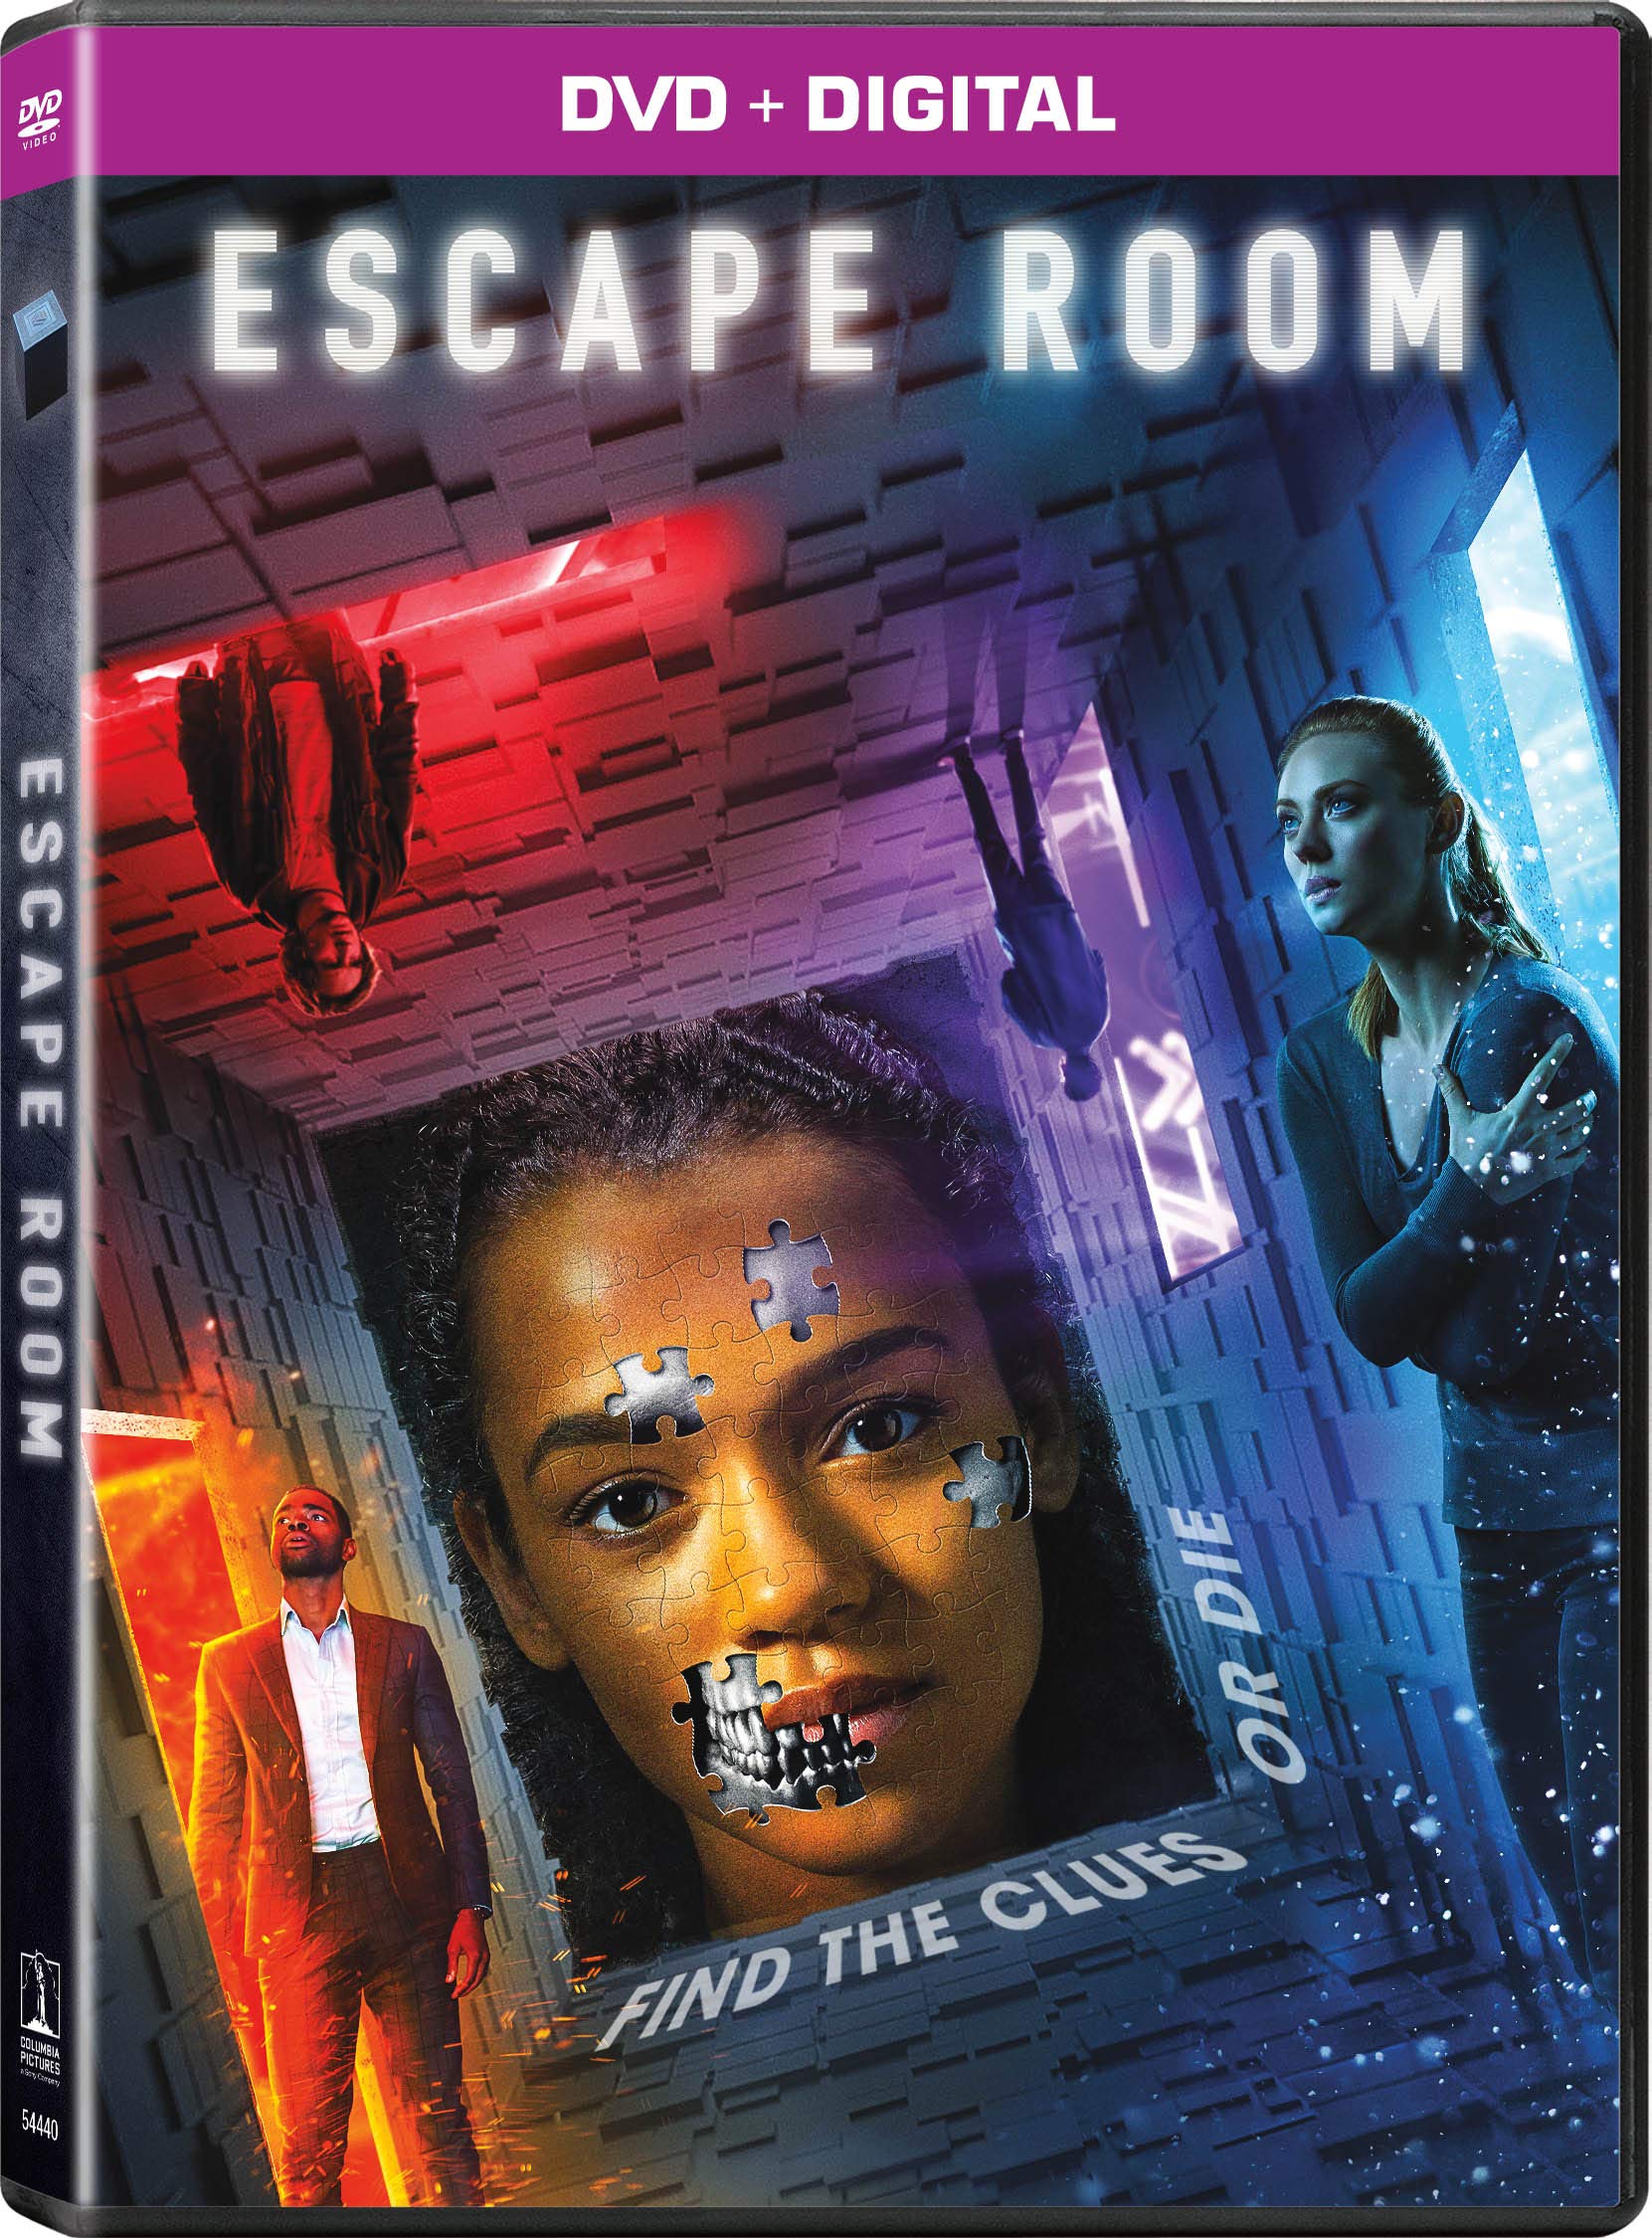 Escape Room DVD Release Date April 23, 2019